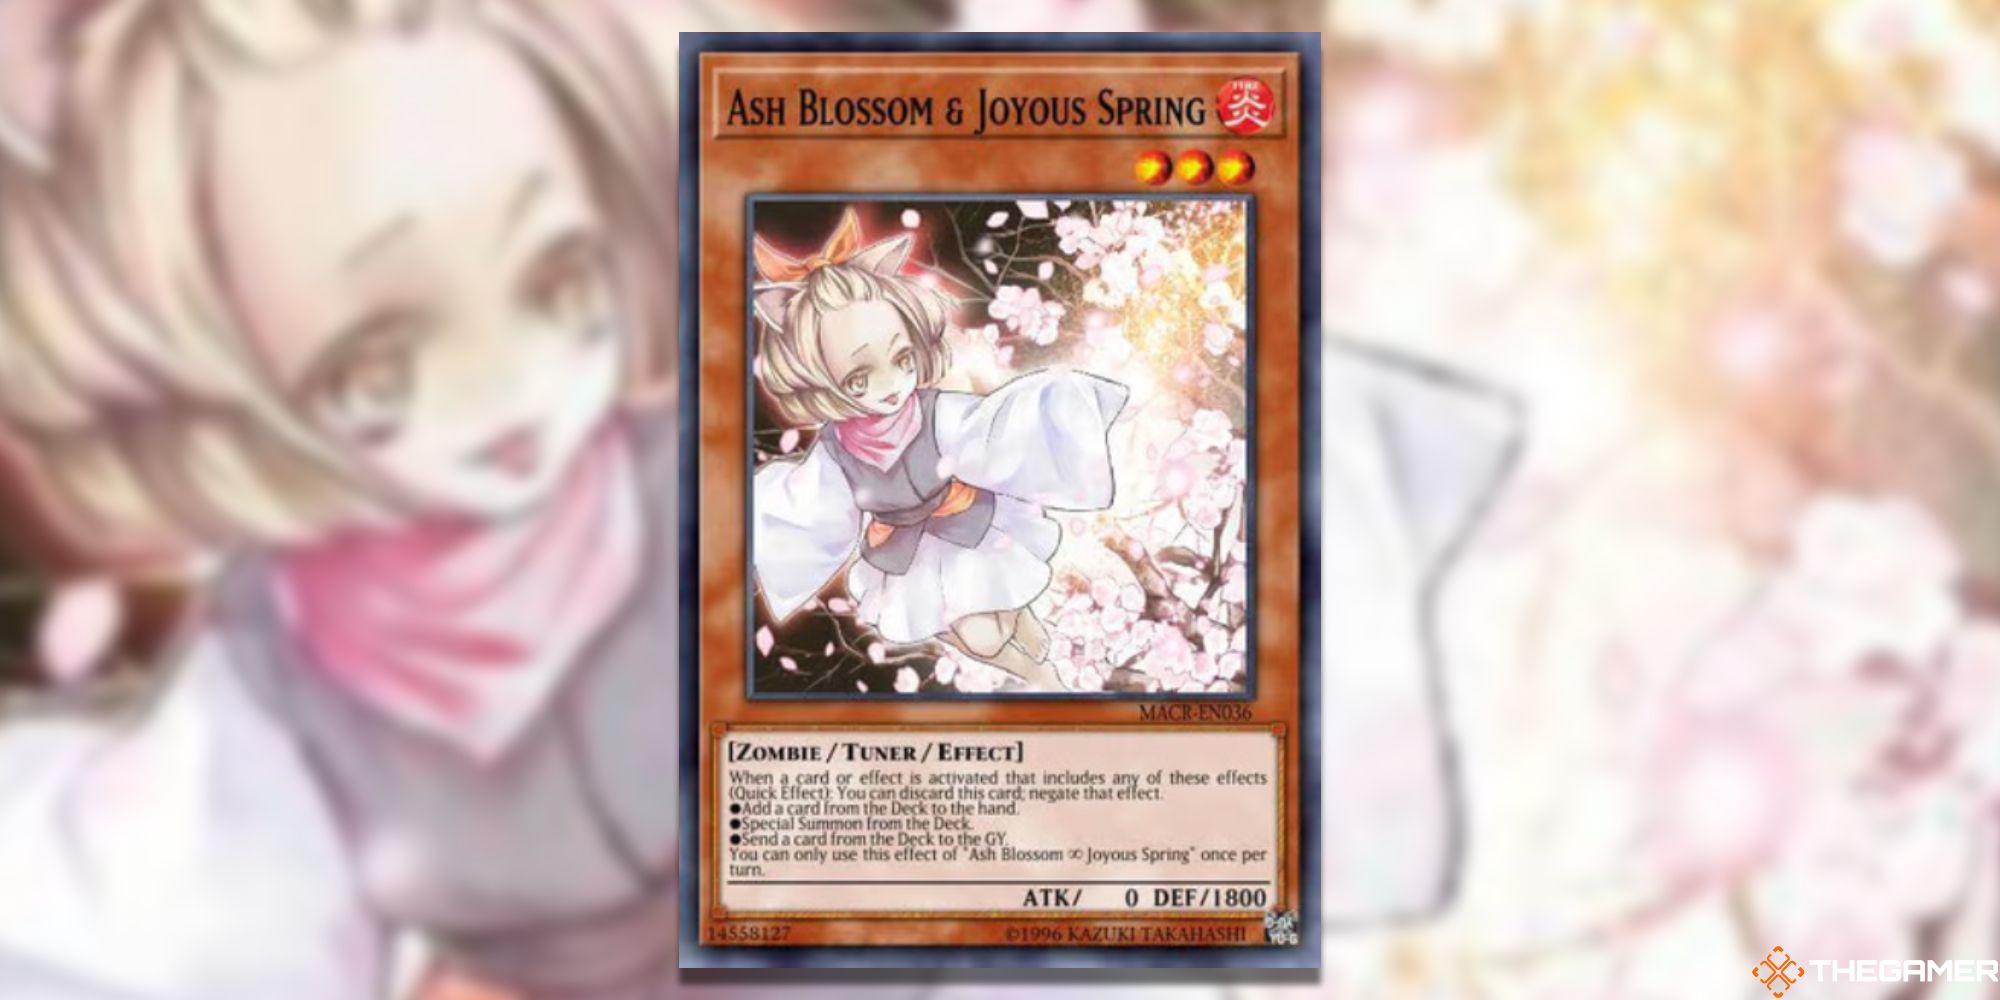 Yu-Gi-Oh! Ash Blossom & Joyous Spring on blurred background